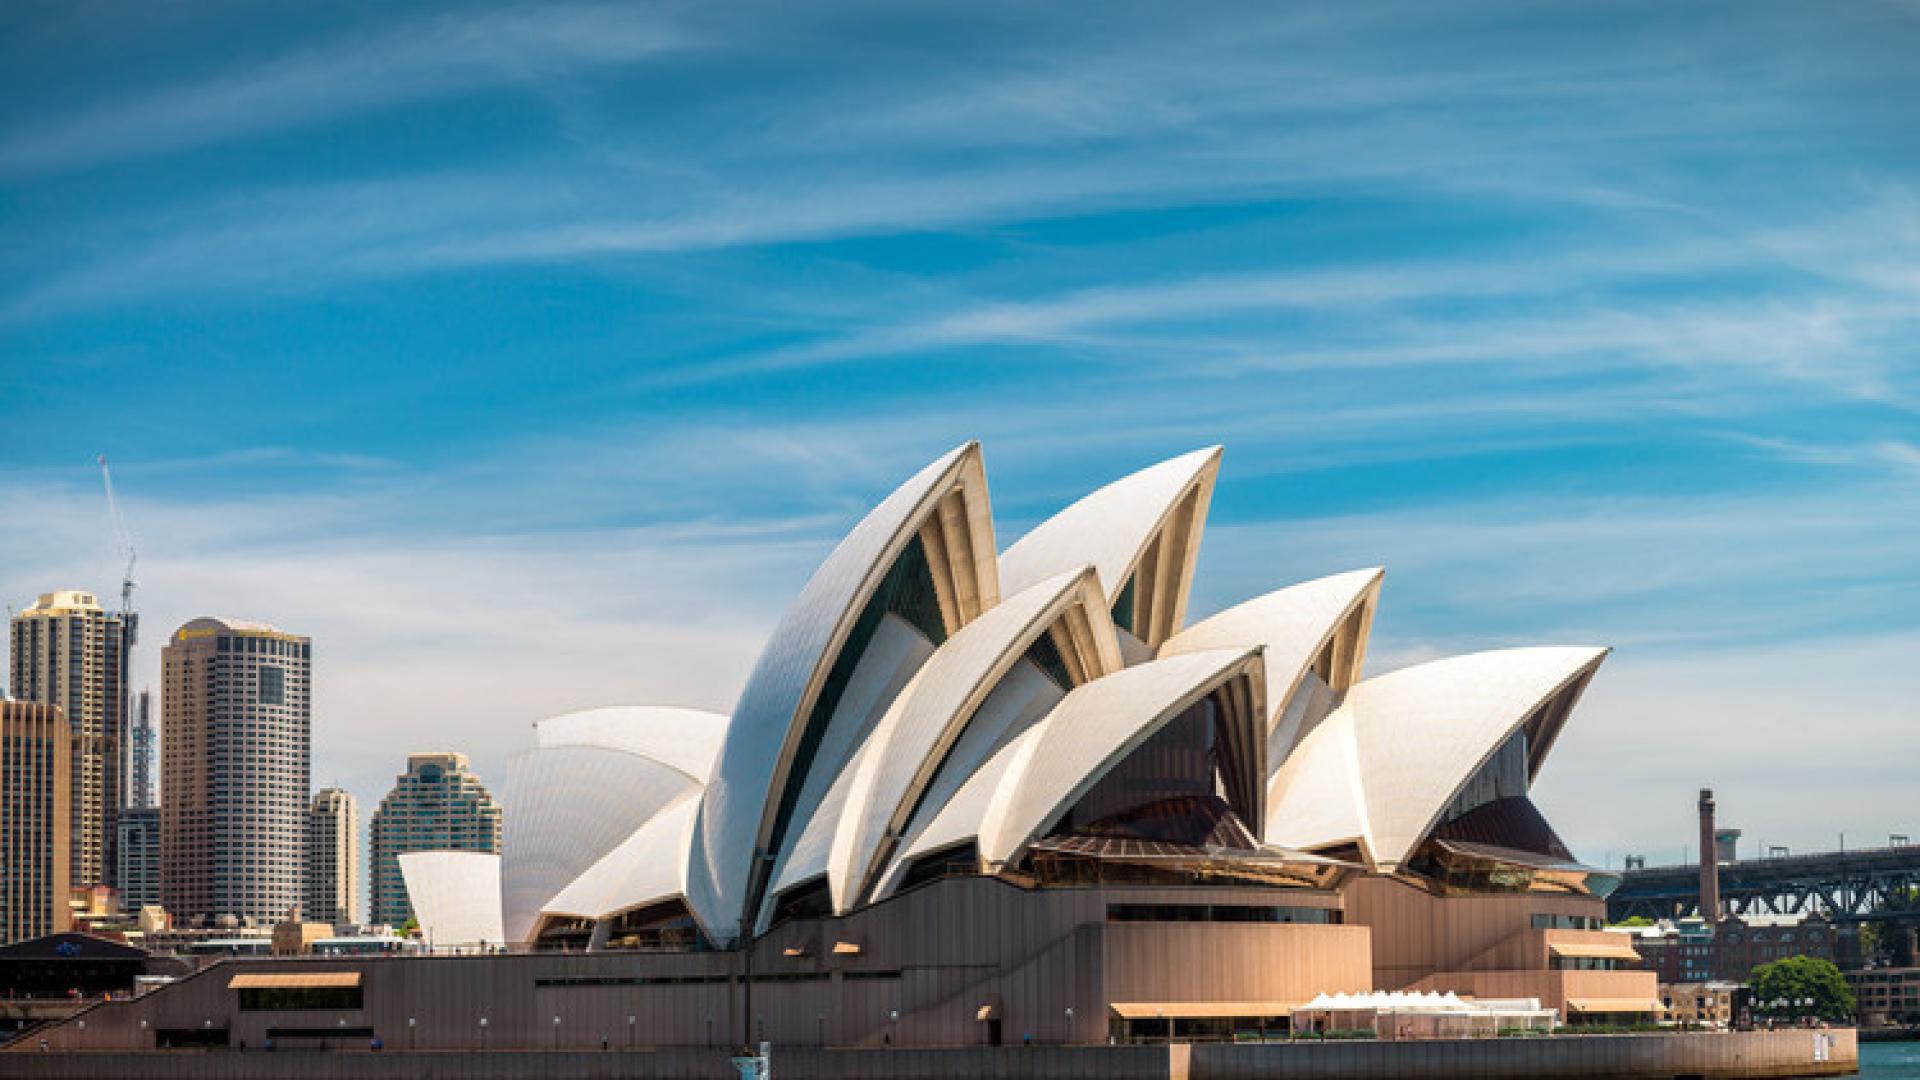 Sydney Opera House front angle